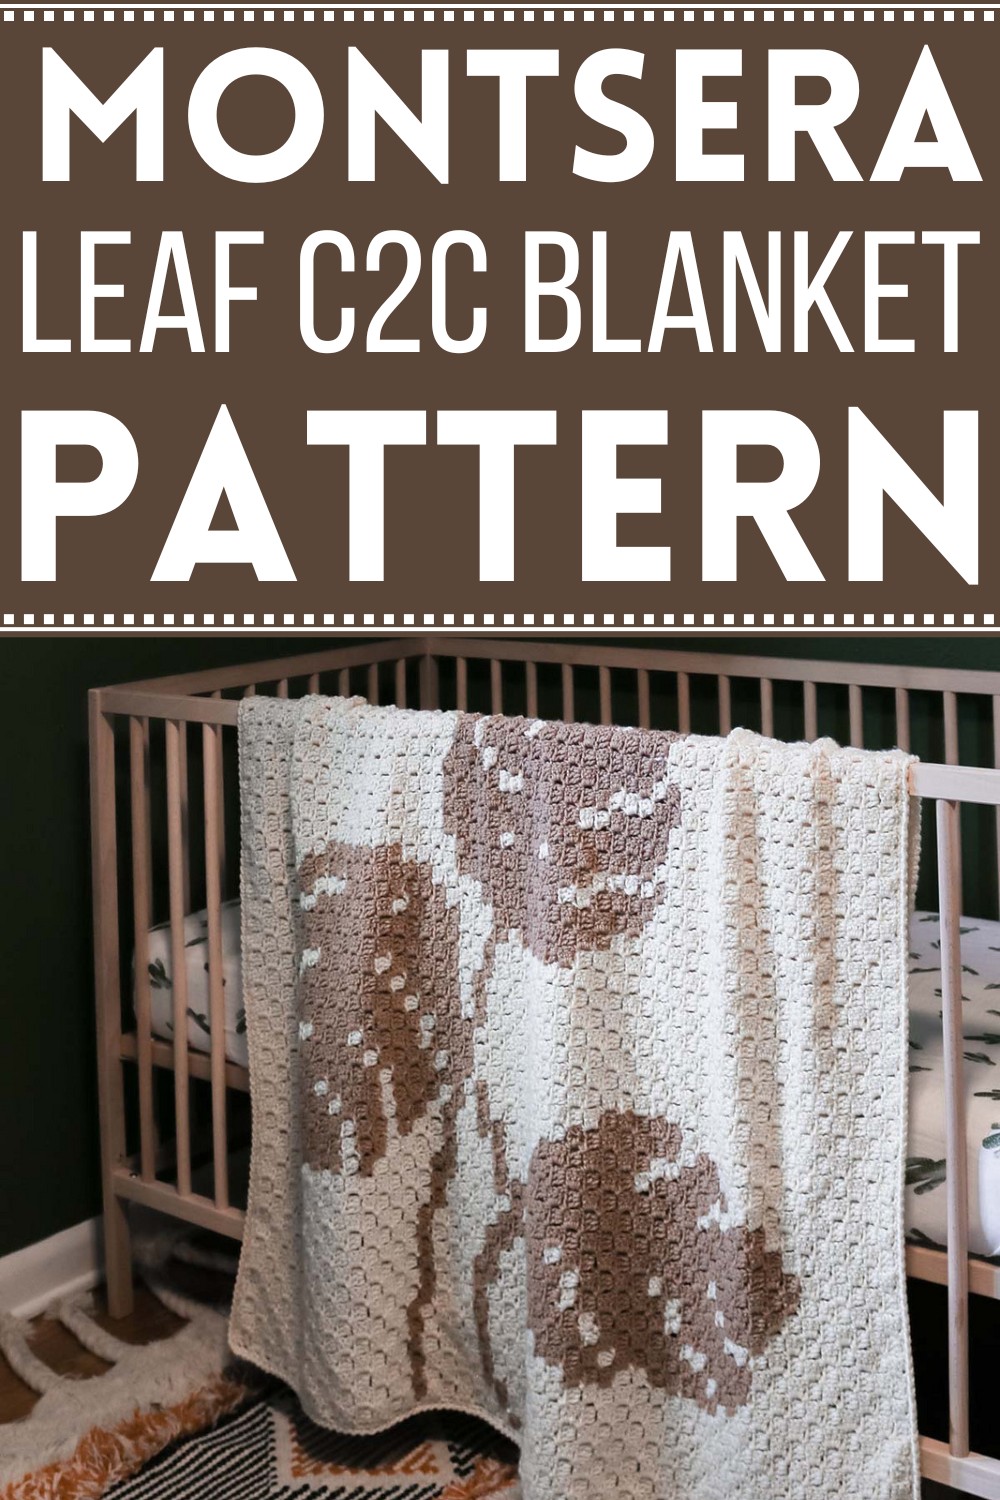 Montsera Leaf C2c Blanket